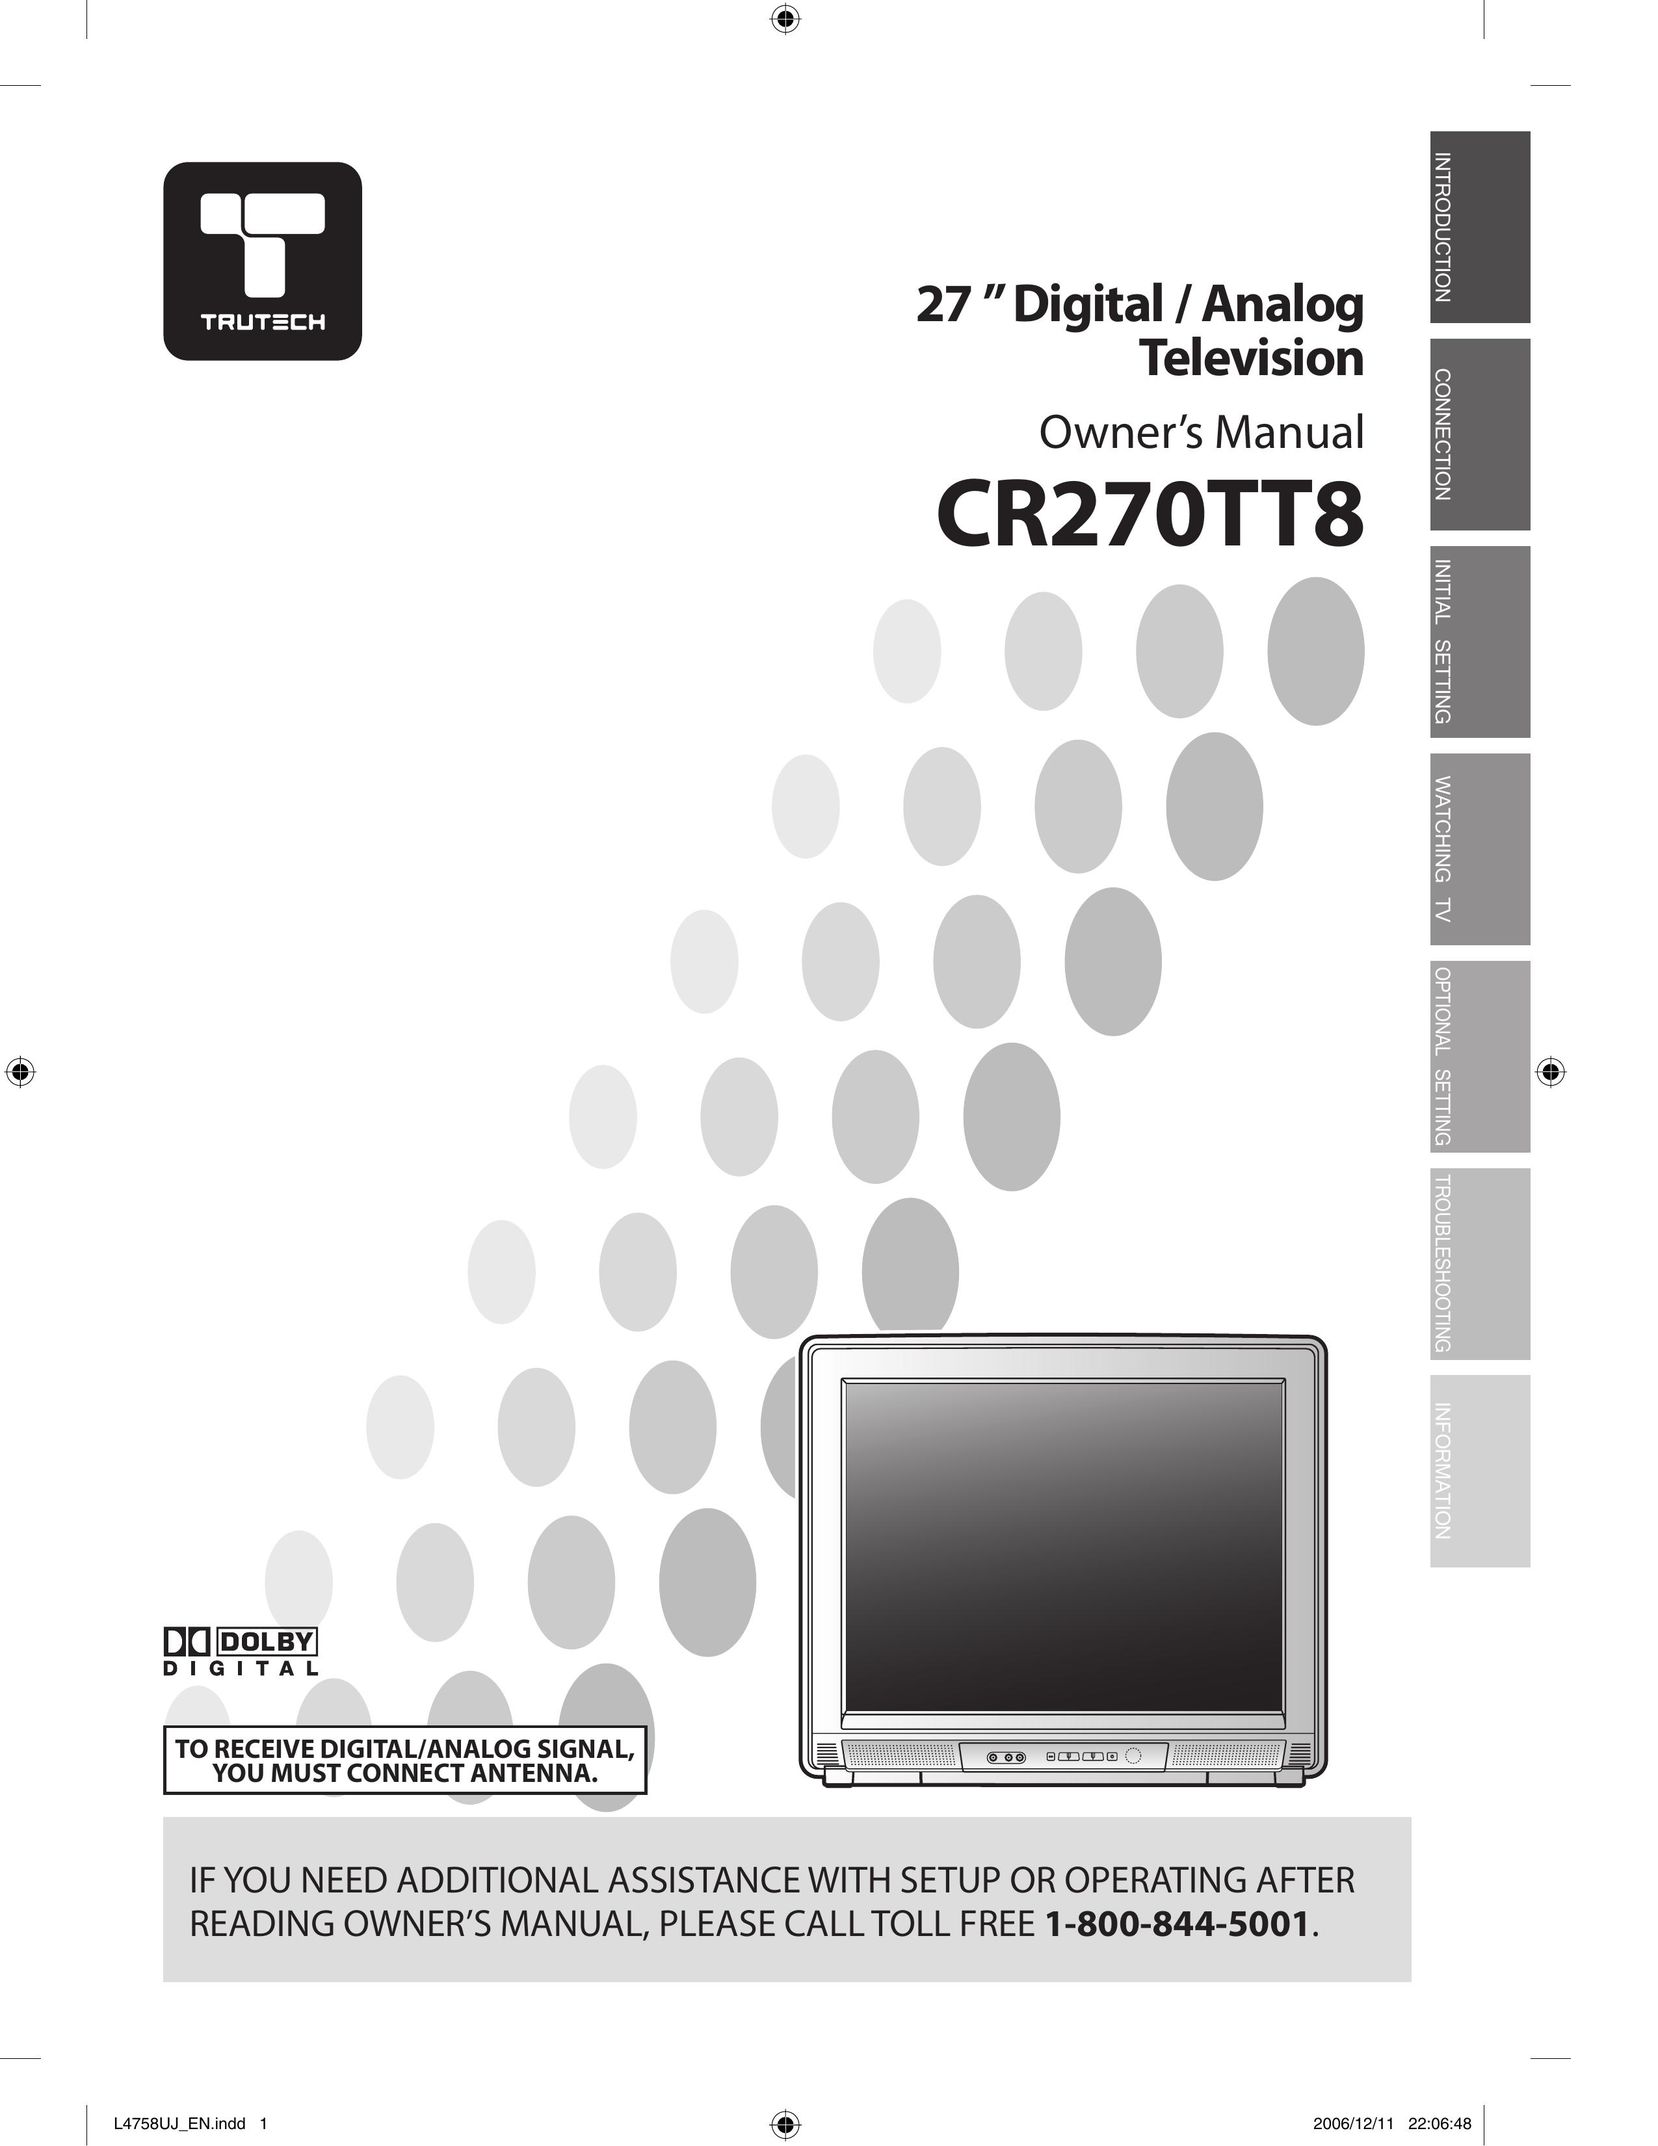 FUNAI CR270TT8 CRT Television User Manual